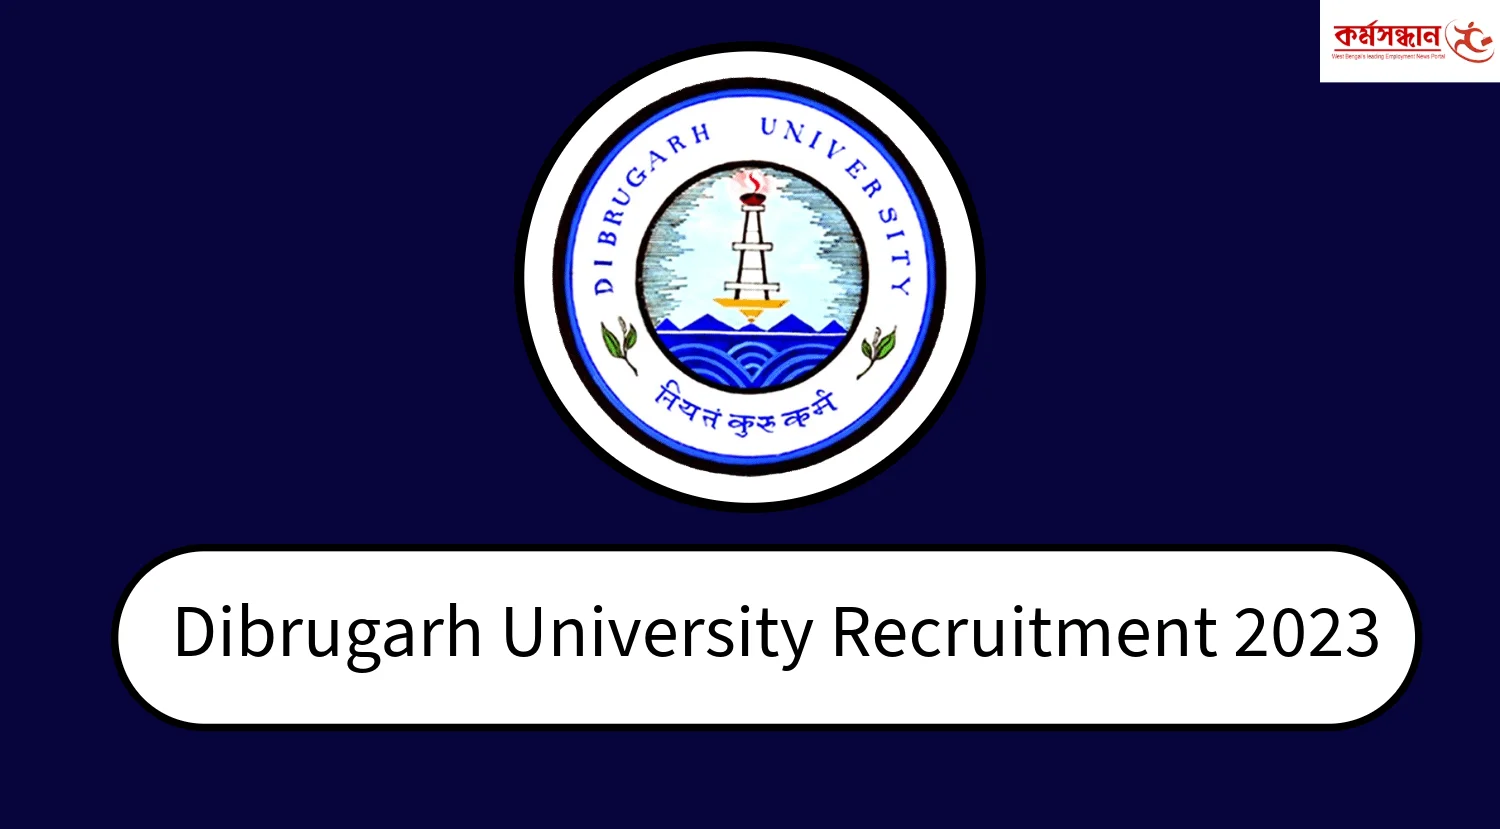 Dibrugarh University Entrance Exam 2020 | Application Form, Exam Date